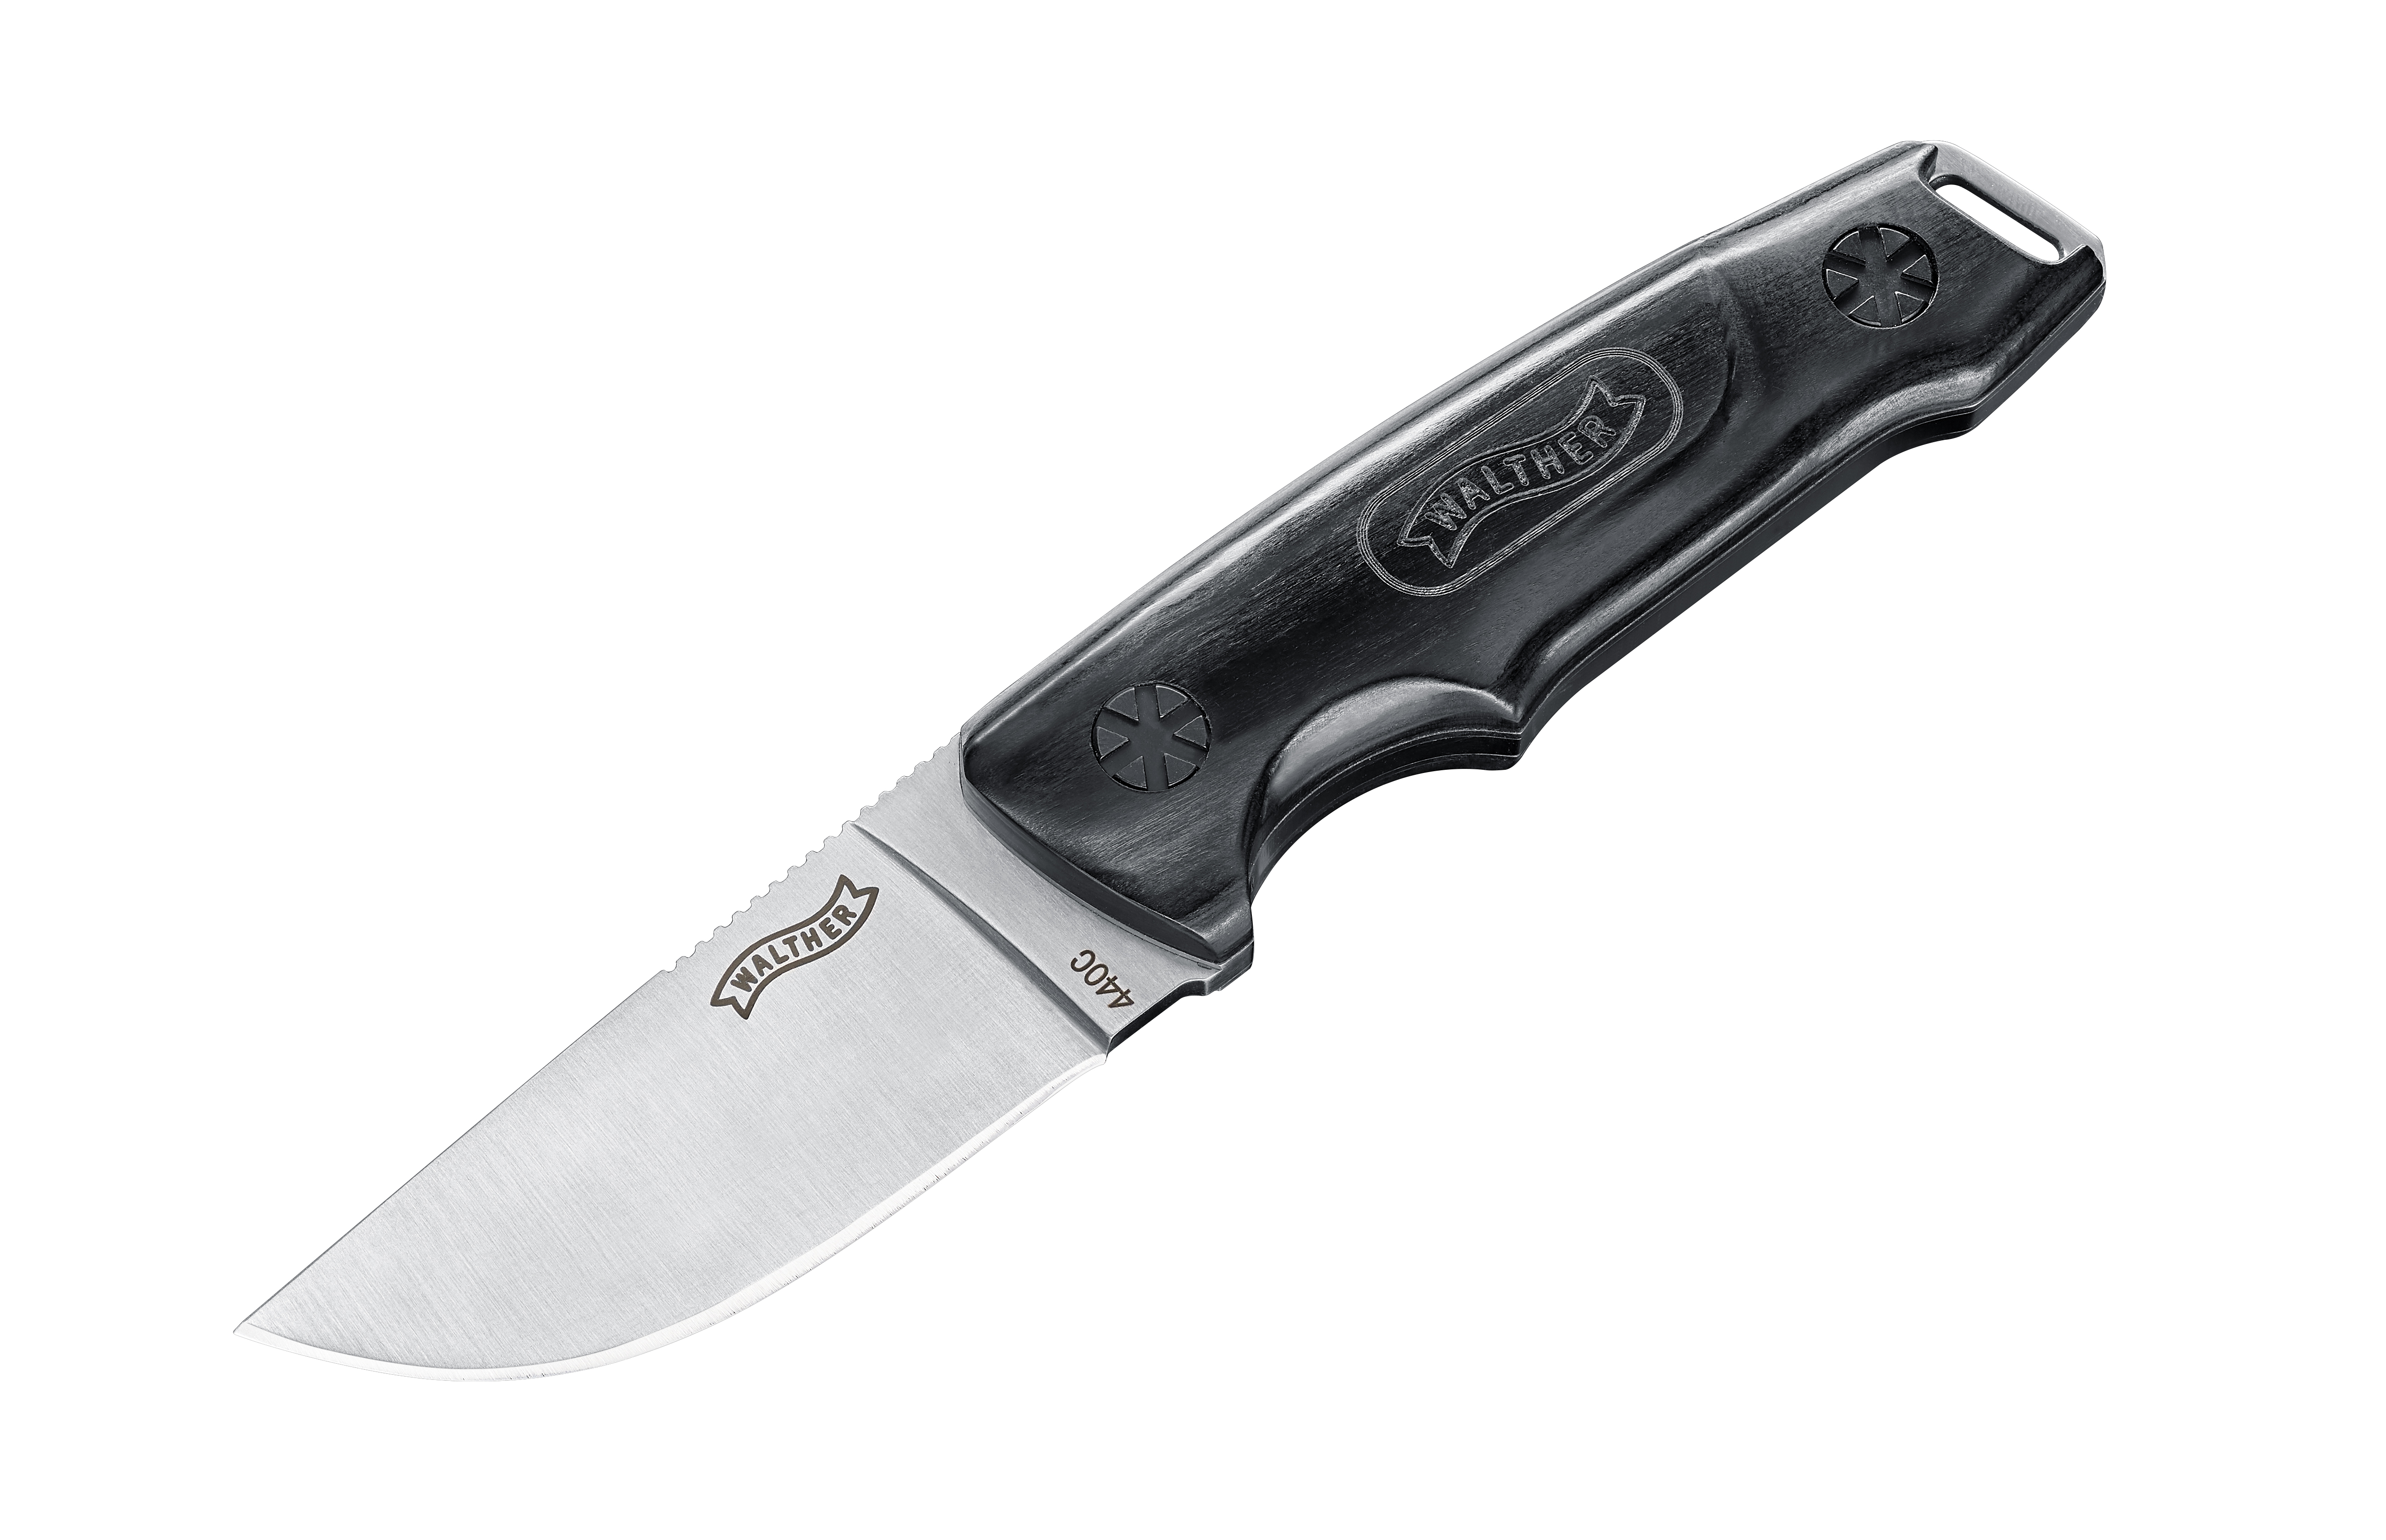 WALTHER (Umarex) Knife BNK 6 - Black Nature Knive